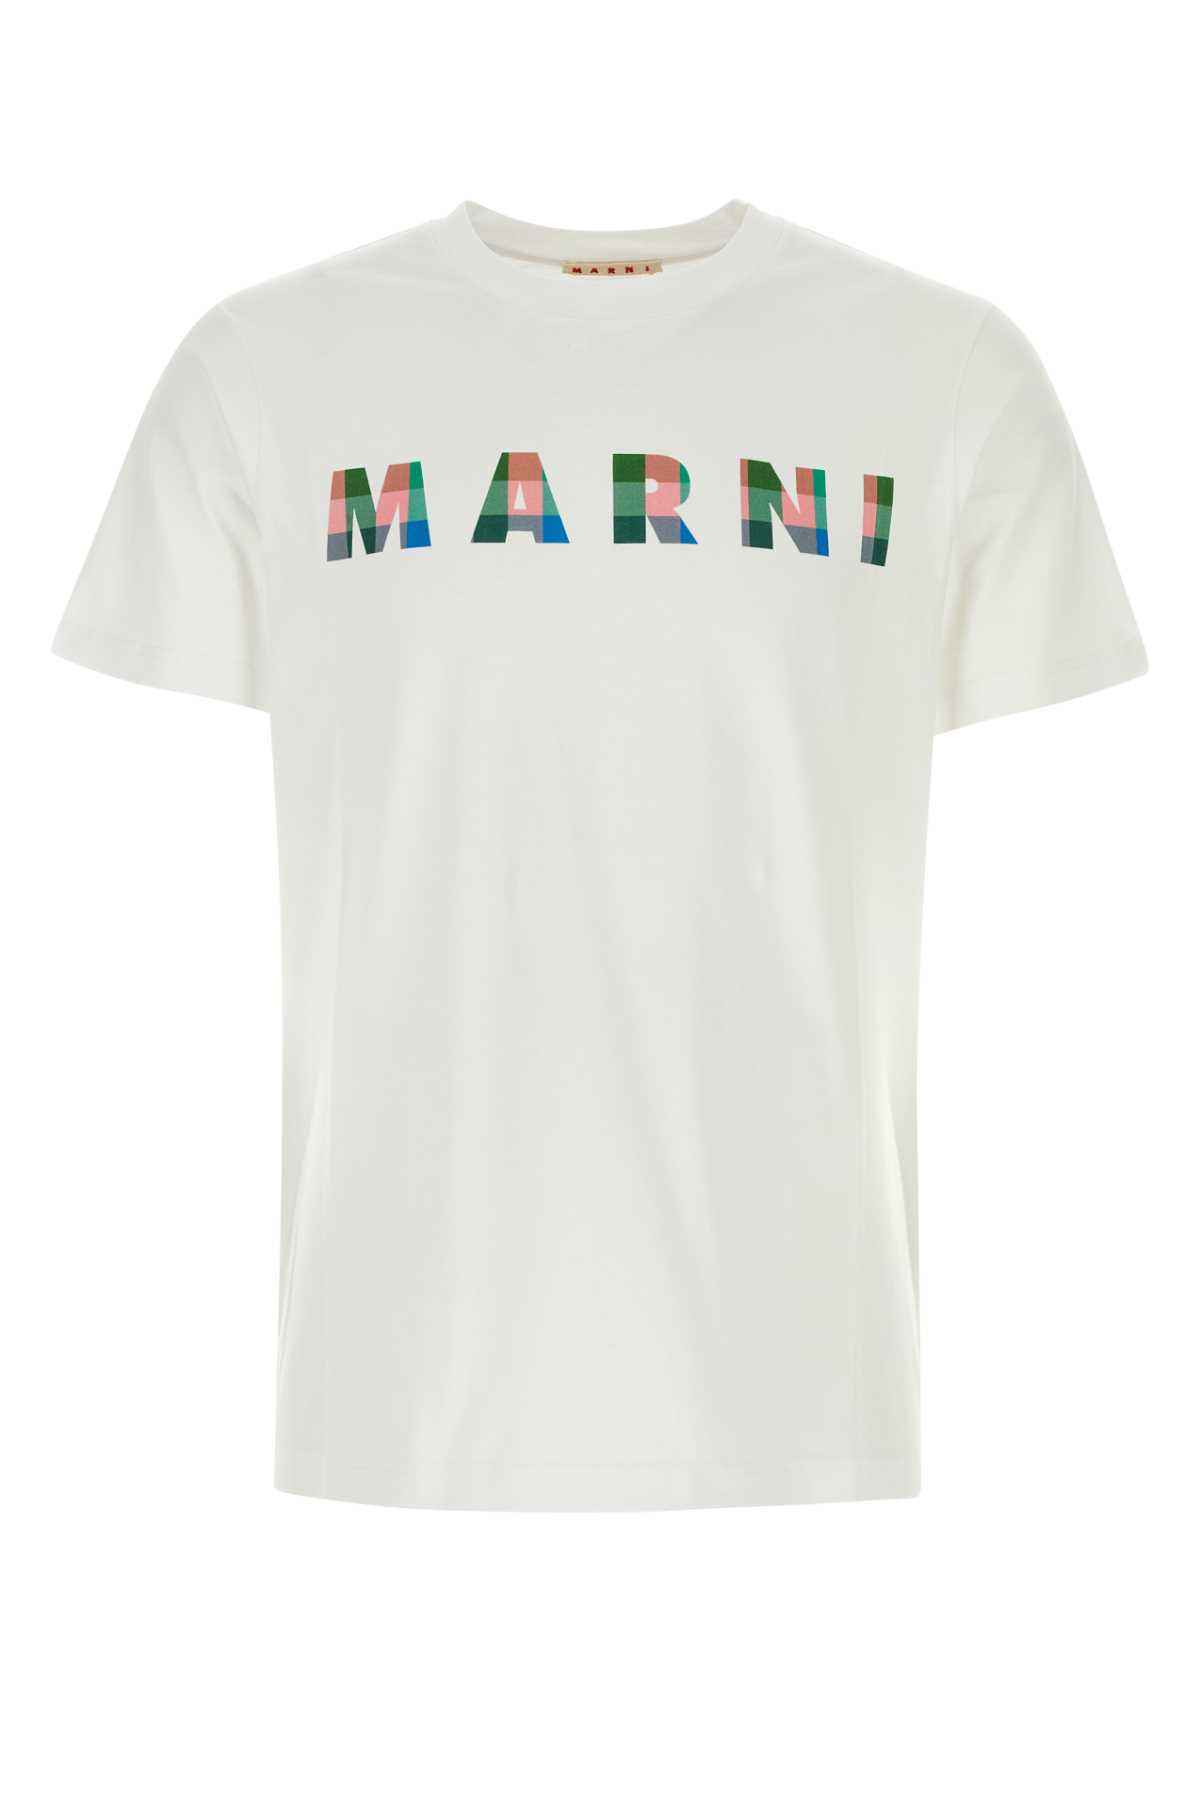 Shop Marni White Cotton T-shirt In Lilywhite